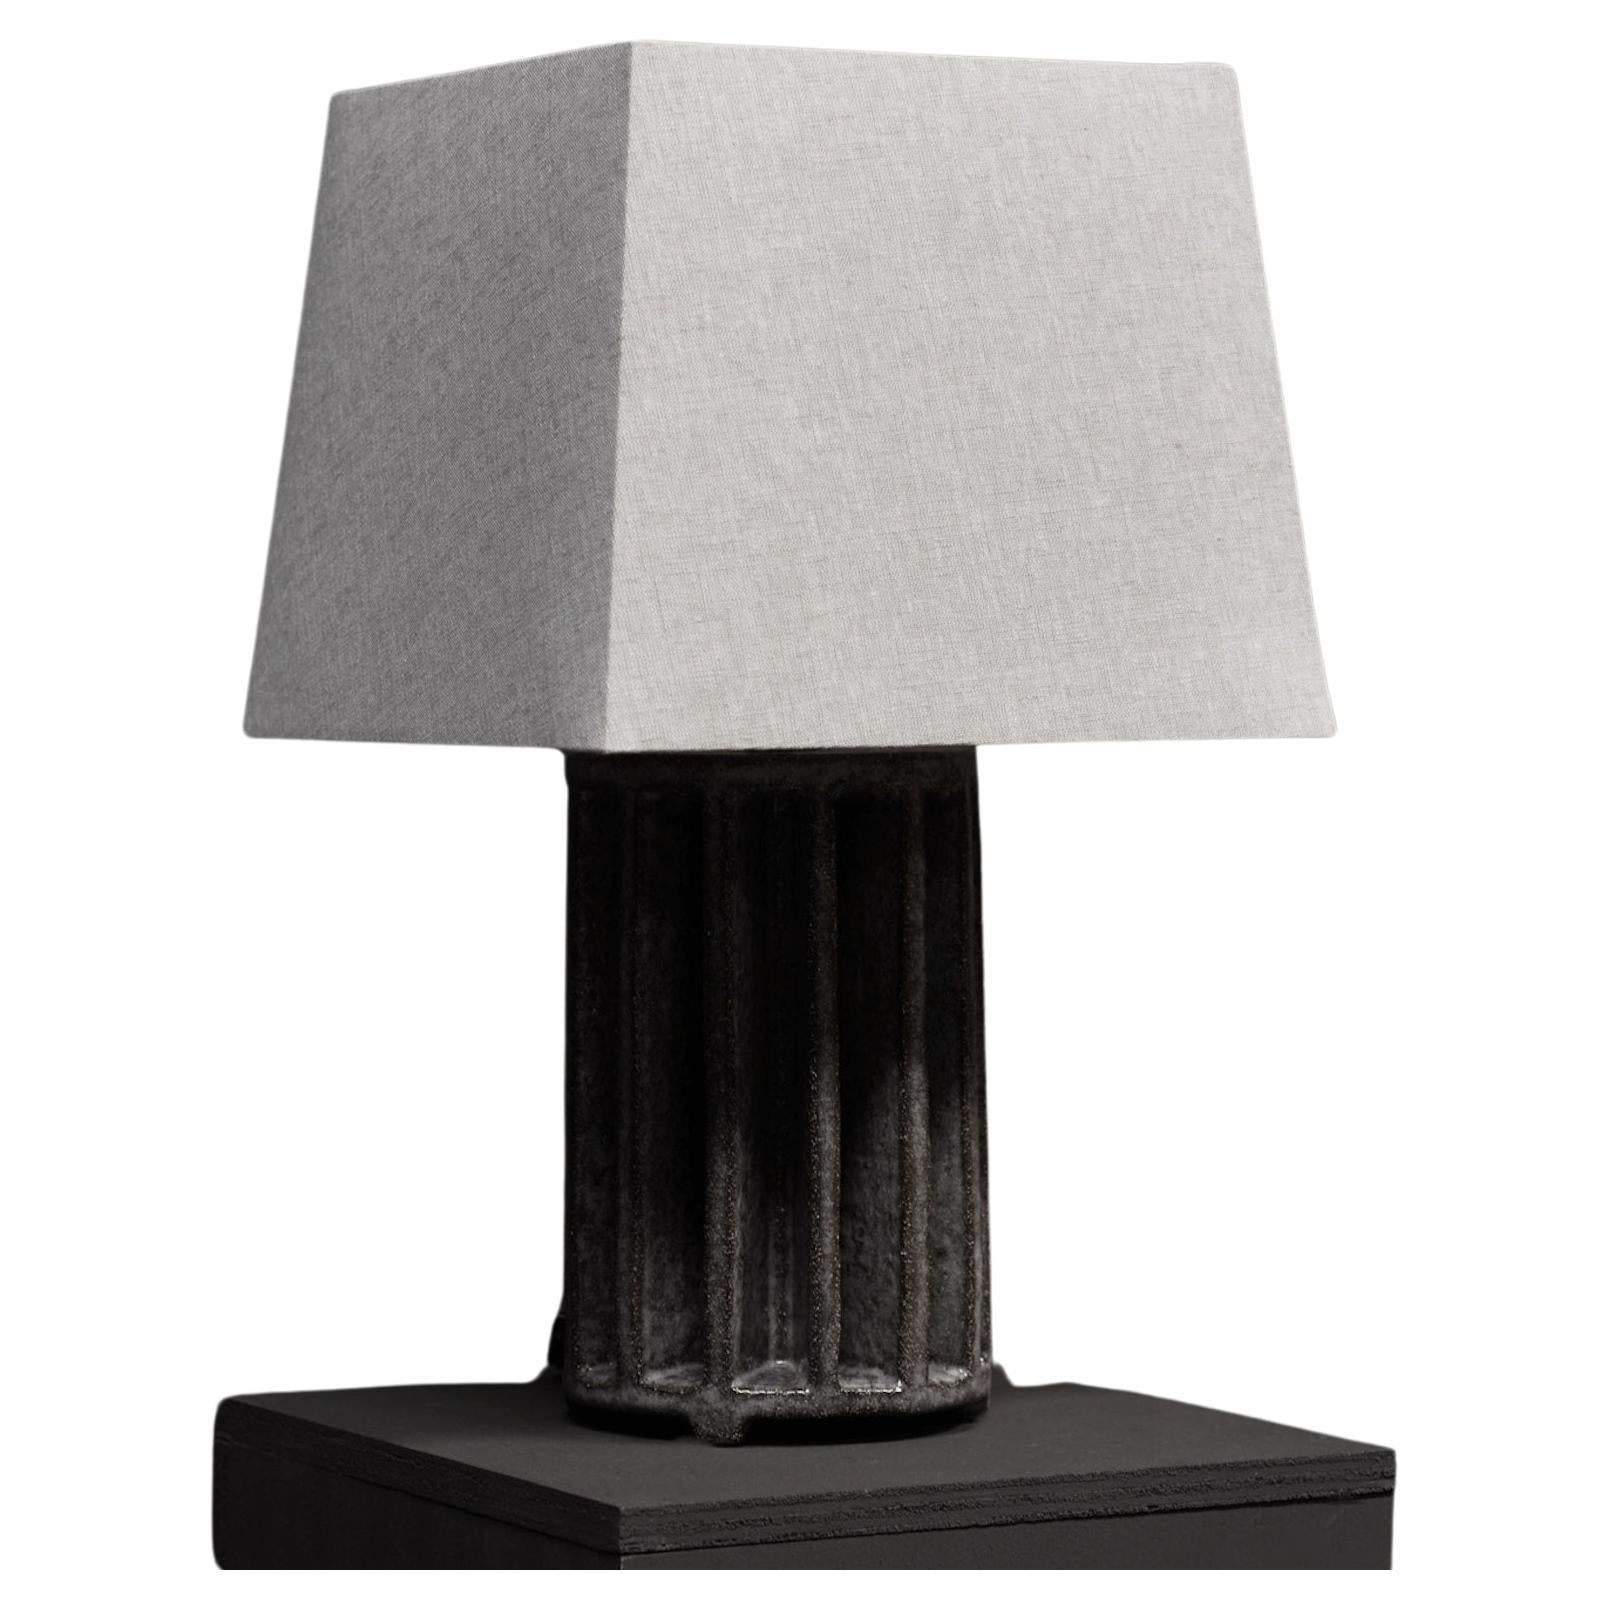 Sculptured “I” Ceramic Table Lamp    For Sale